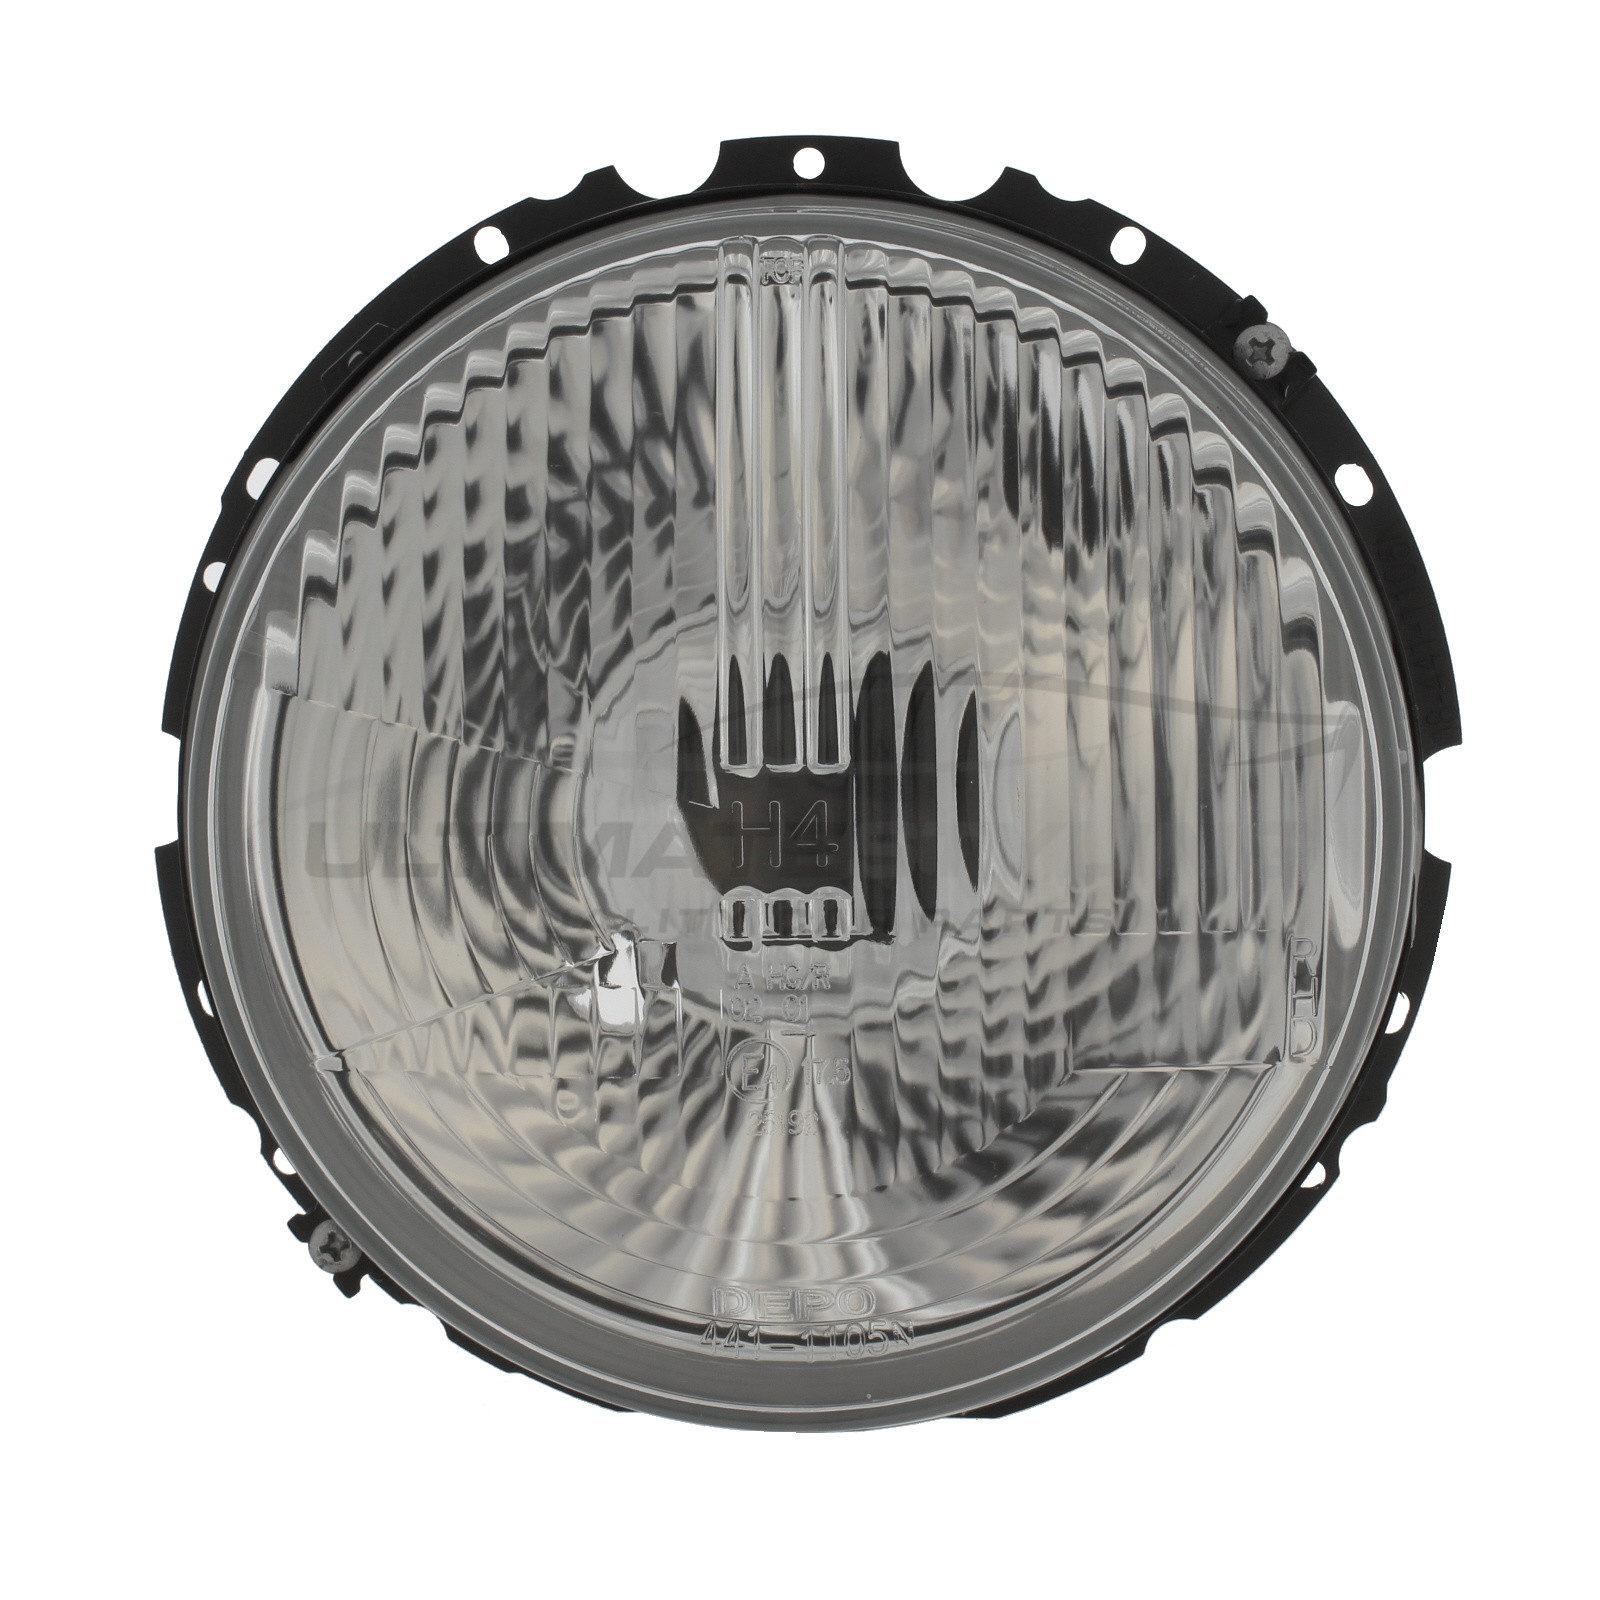 Headlight / Headlamp for VW Golf